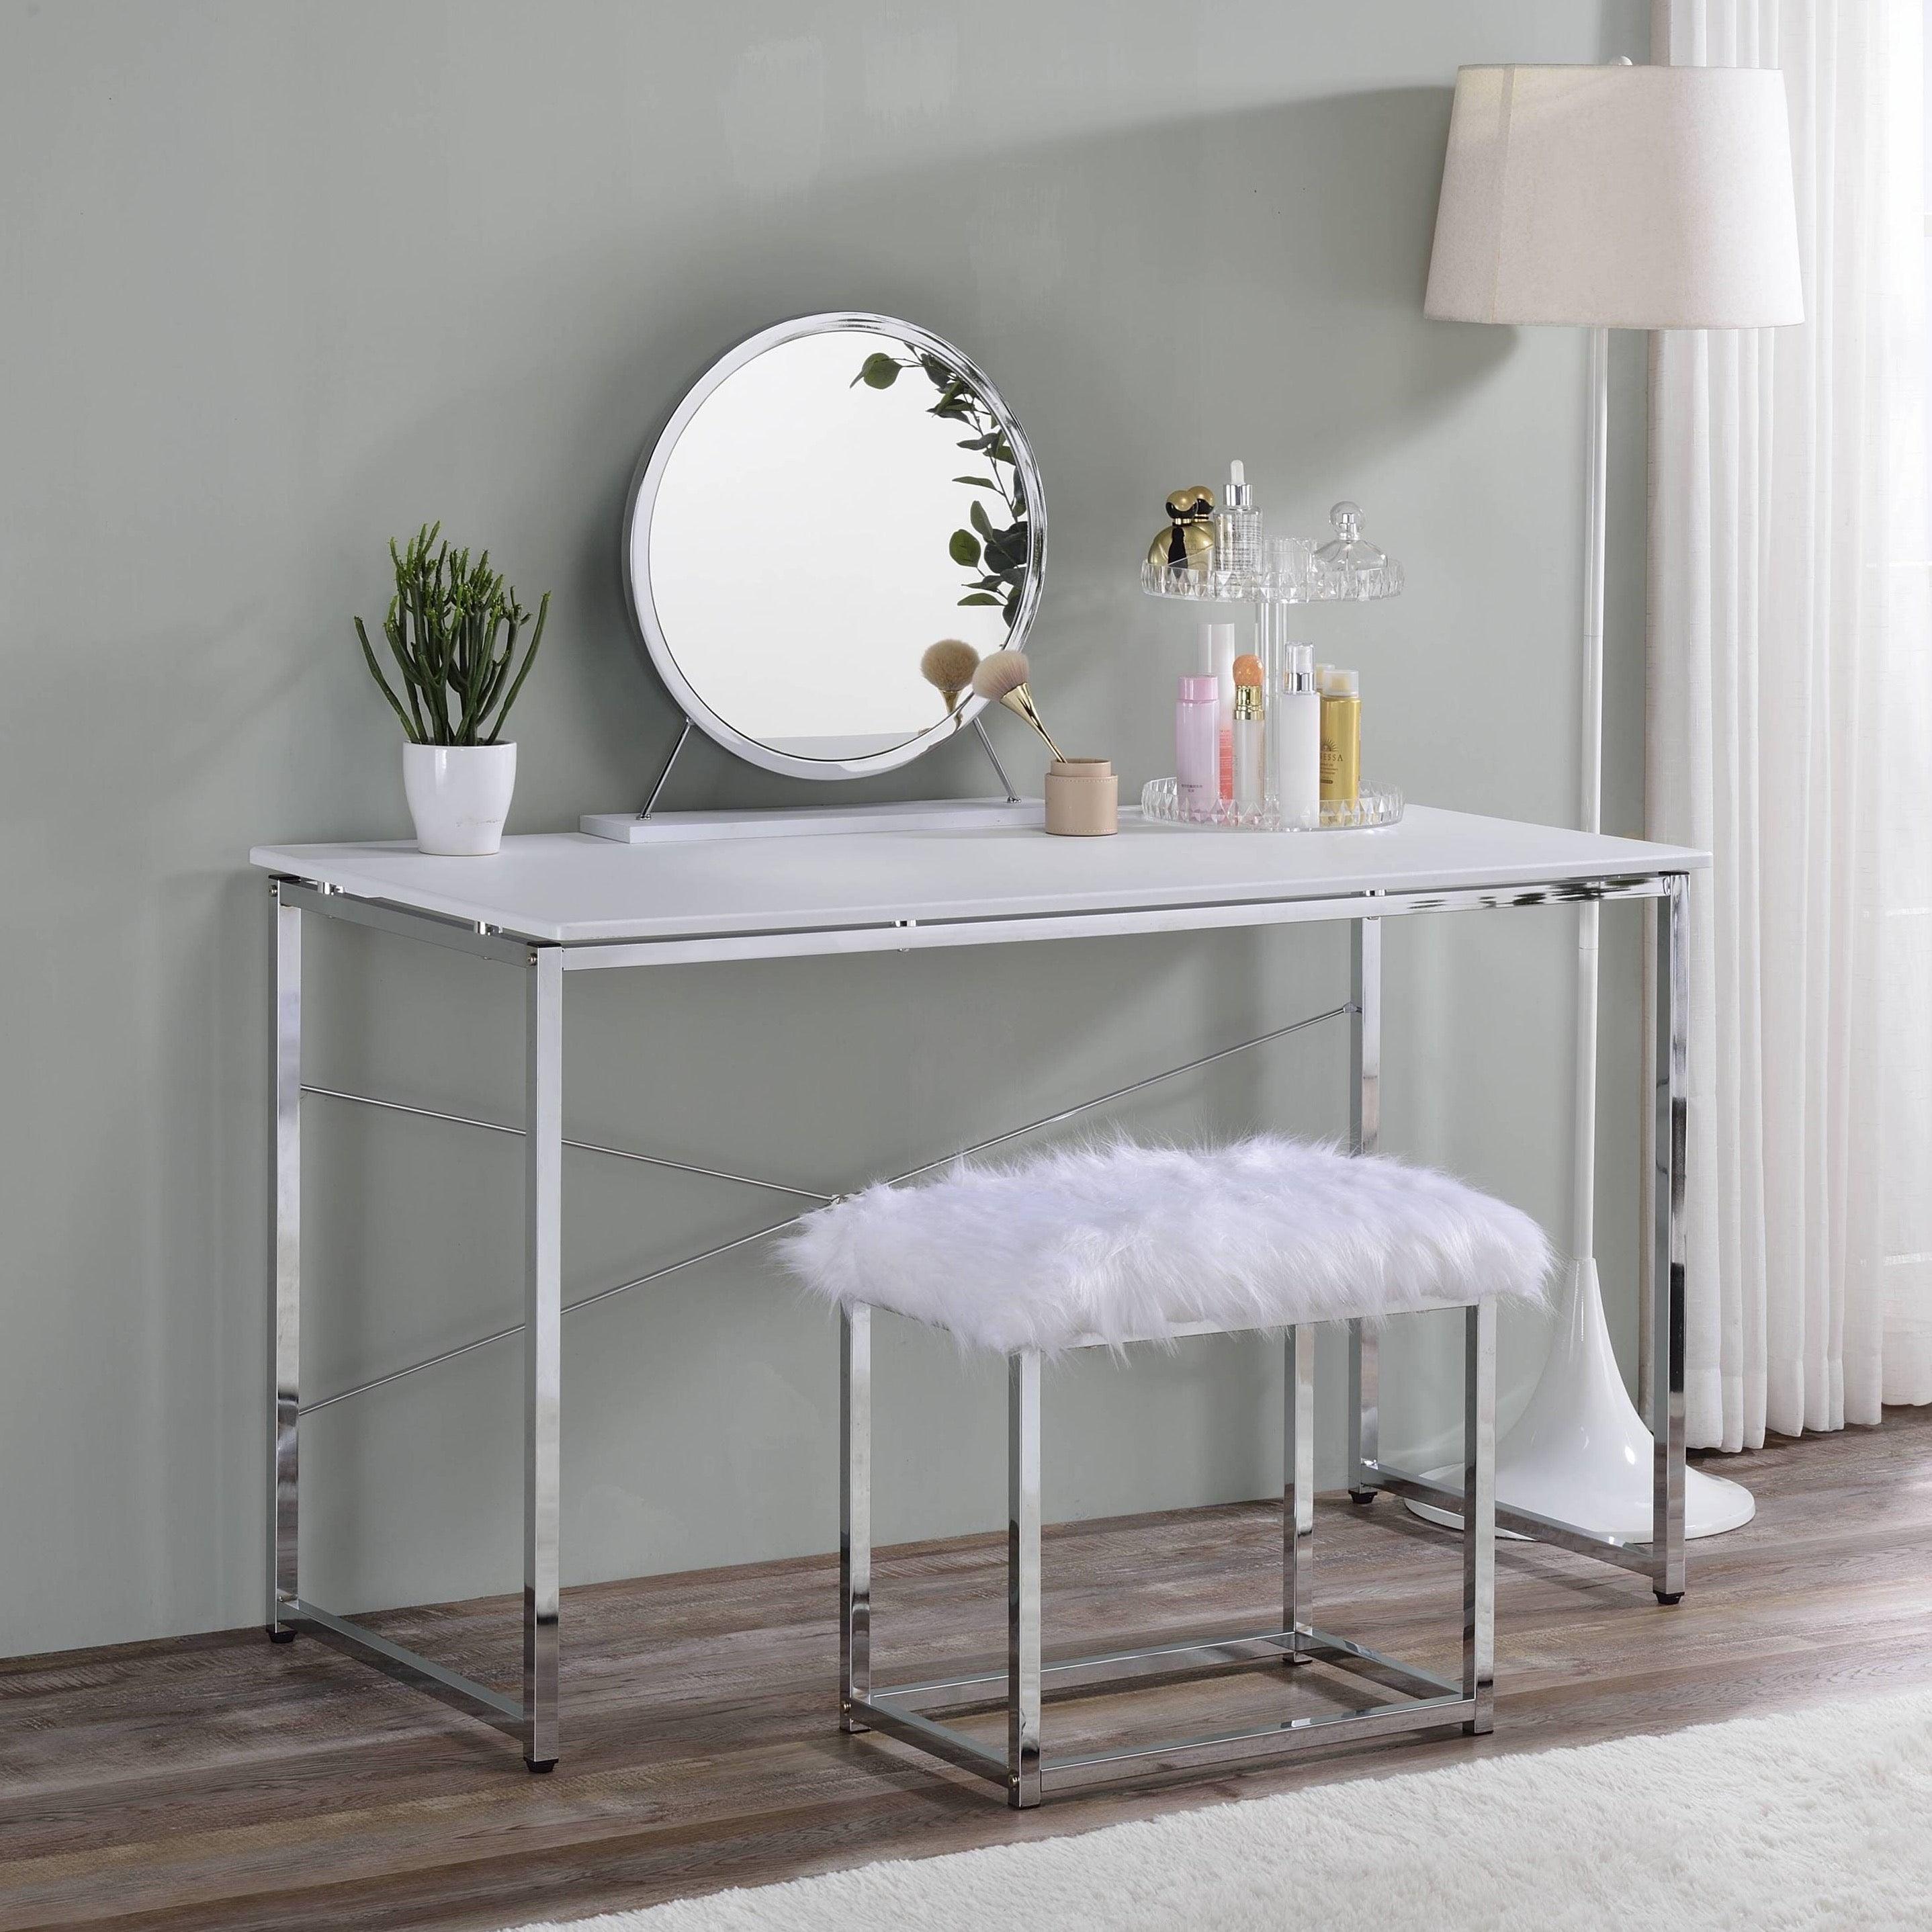 Shop ACME Tennos Vanity Desk  in White & Chrome Finish AC00903 Mademoiselle Home Decor